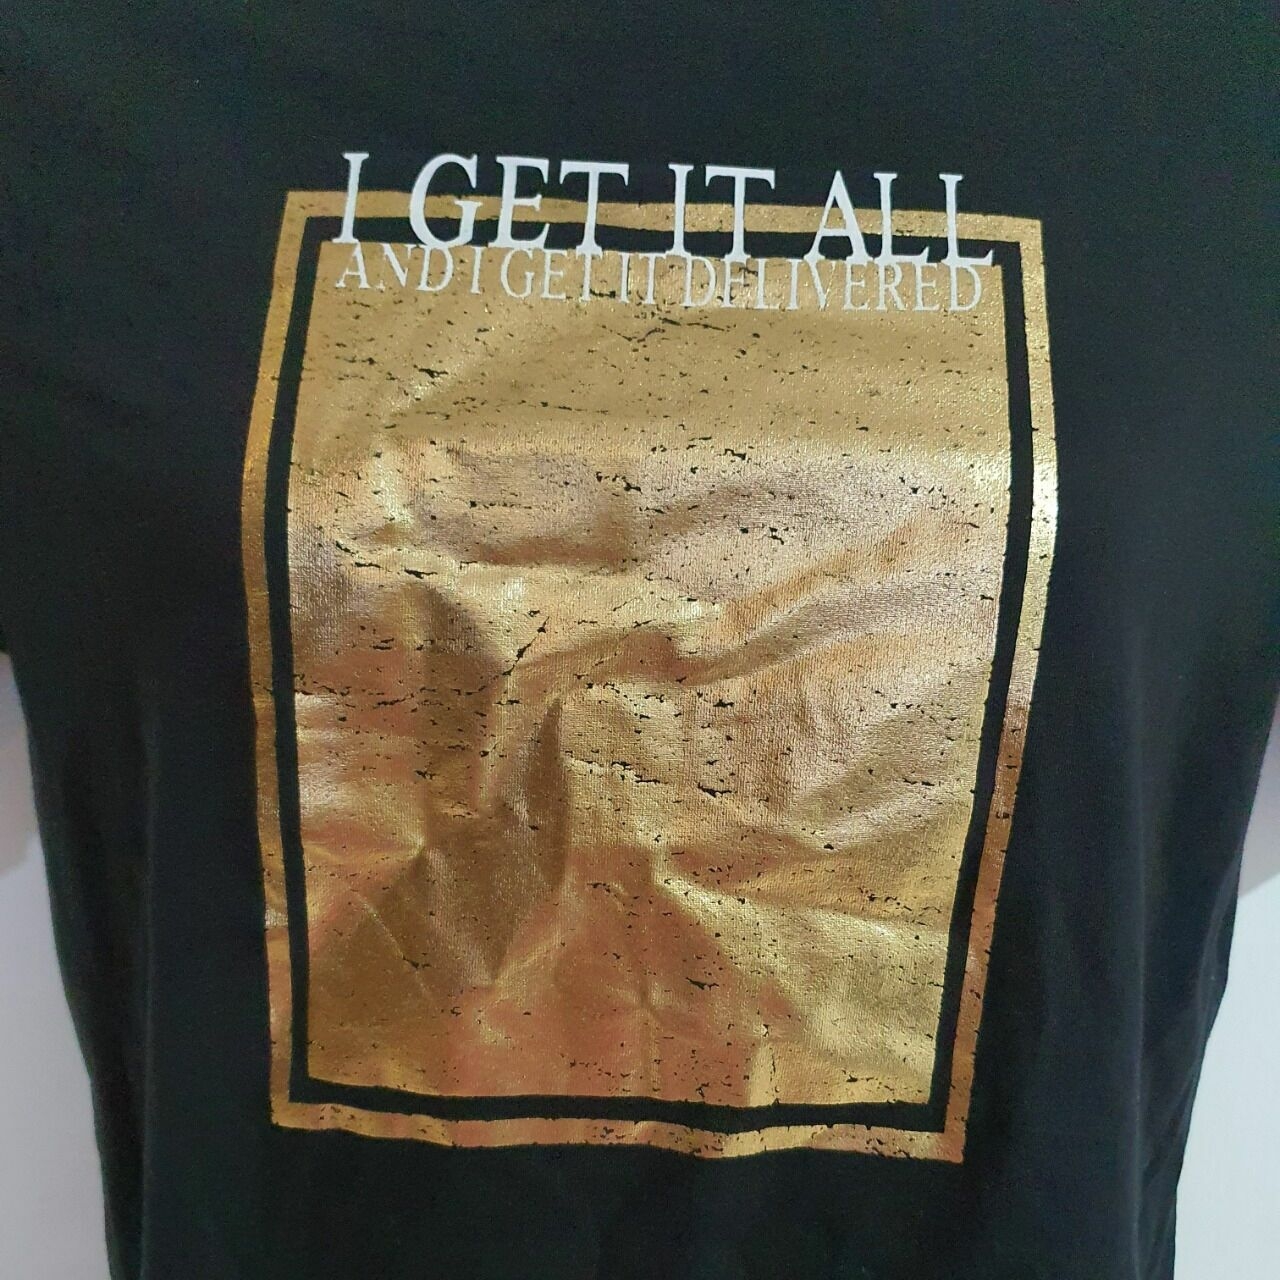 Urban & Co Gold Foil Printed Black Tshirt